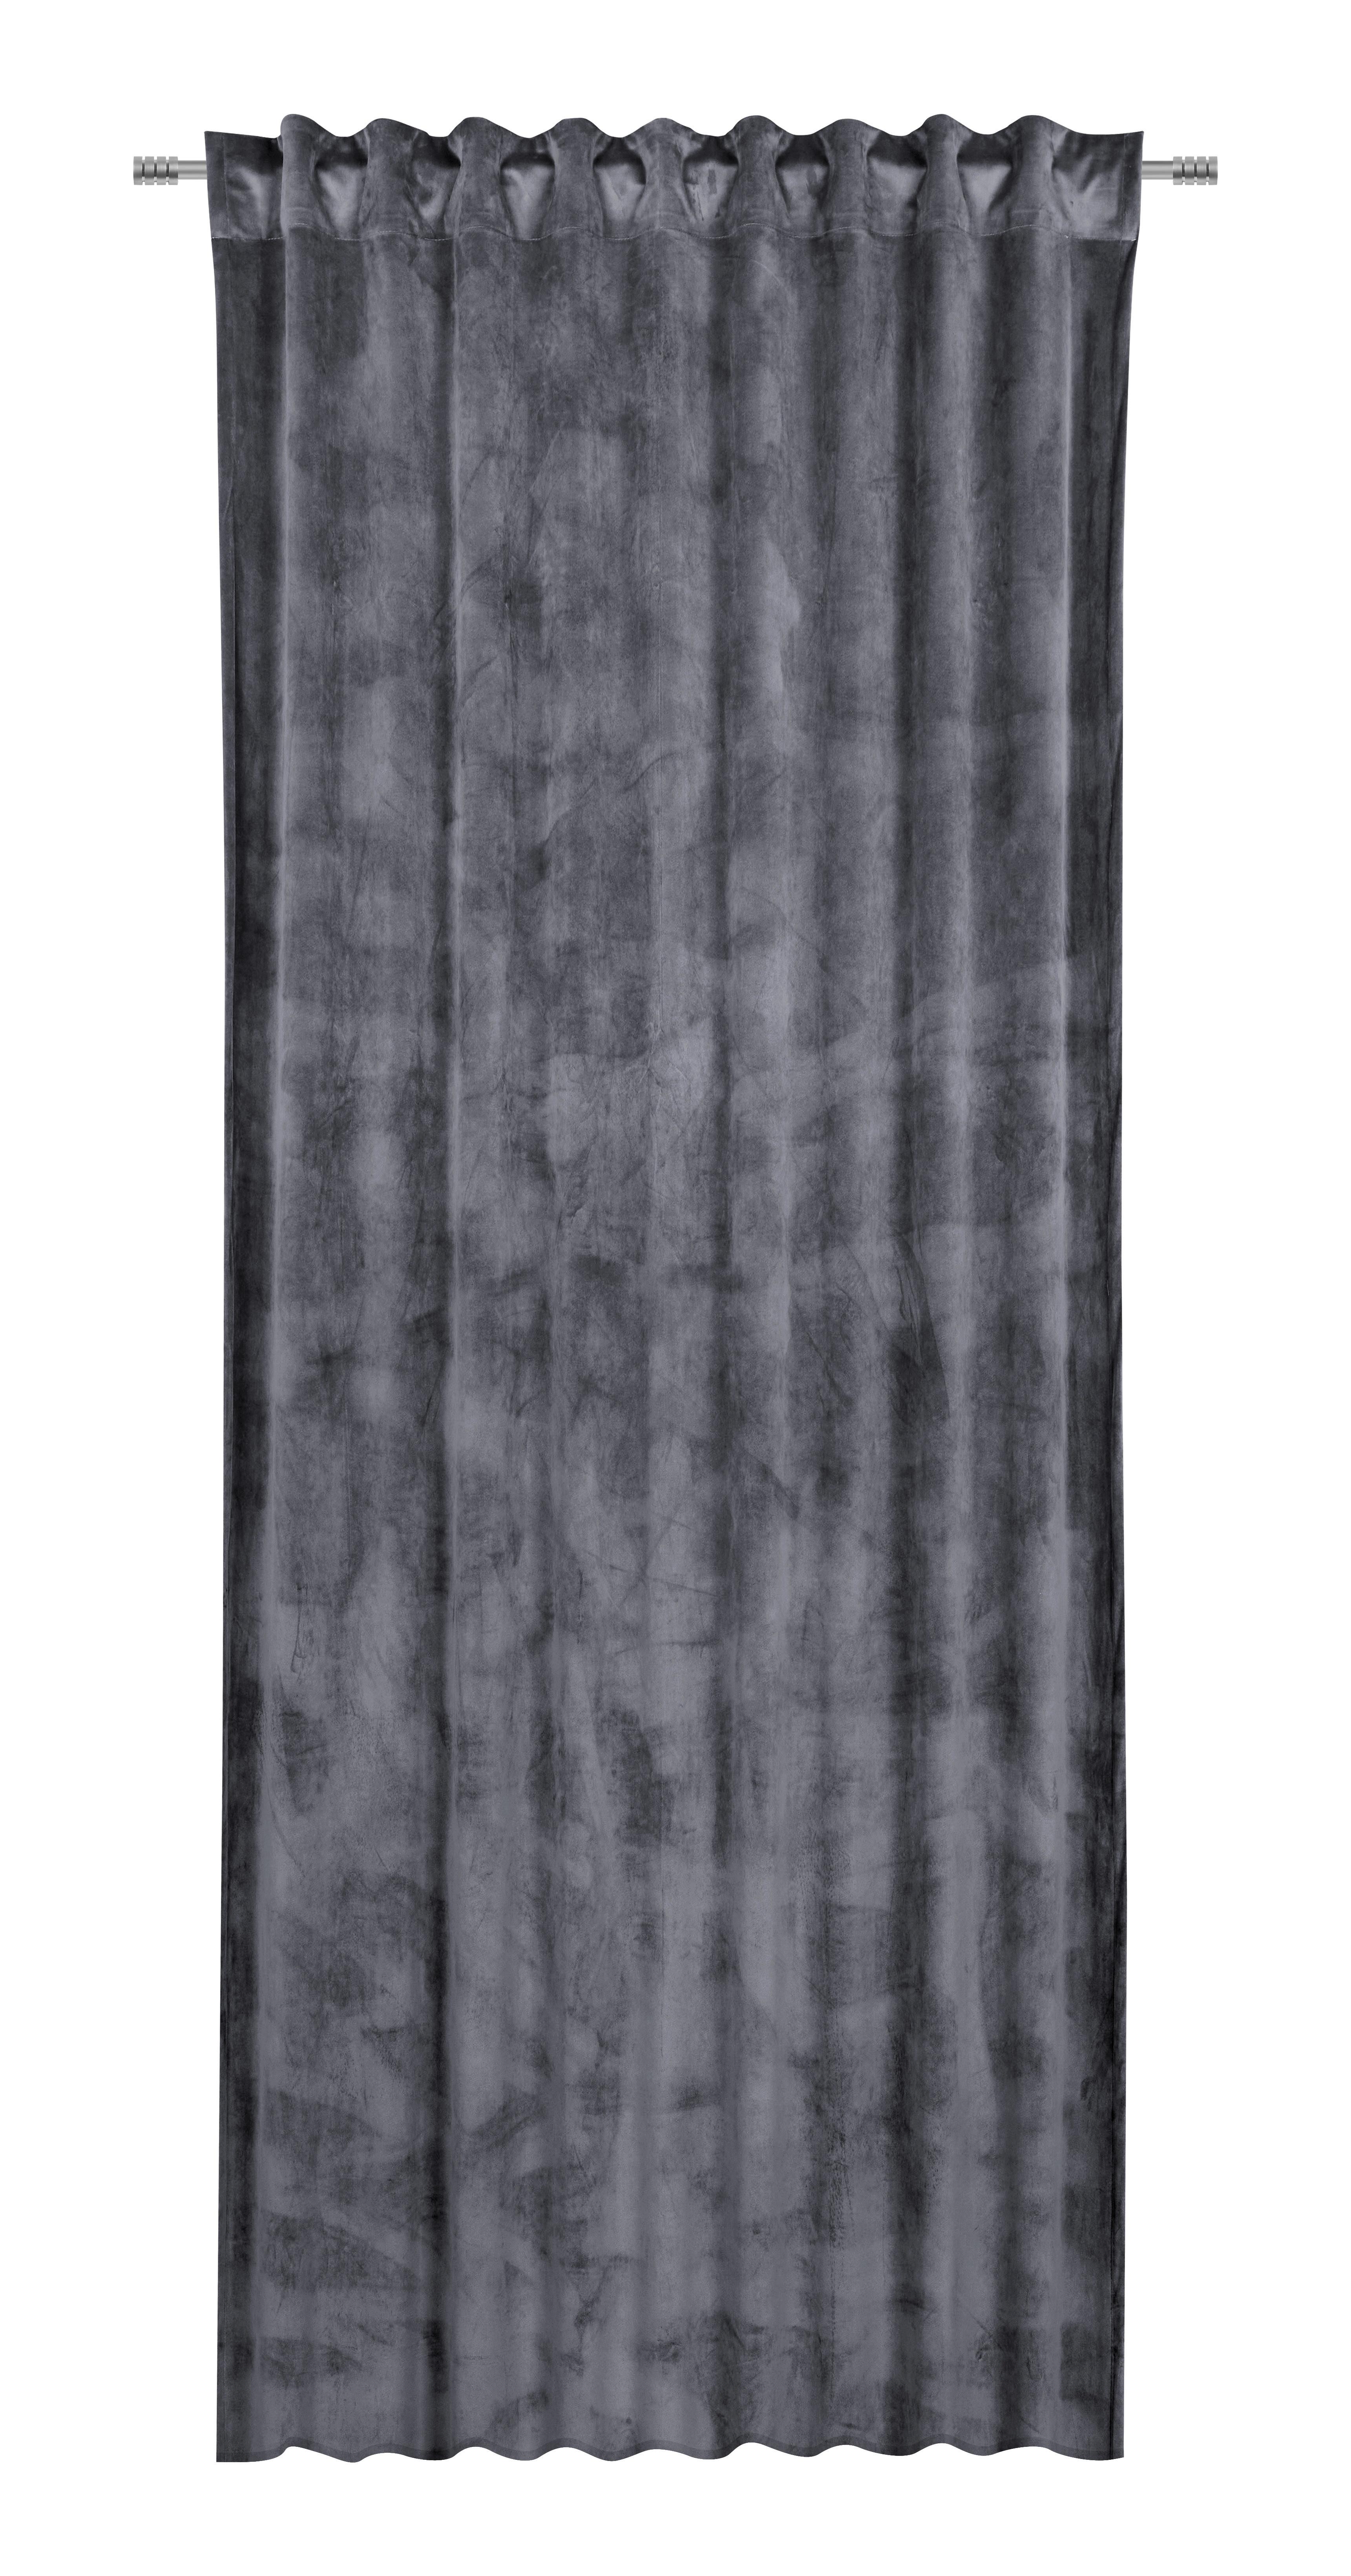 Končana Zavesa Viola - antracit, Konvencionalno, tekstil (140/245cm) - Premium Living